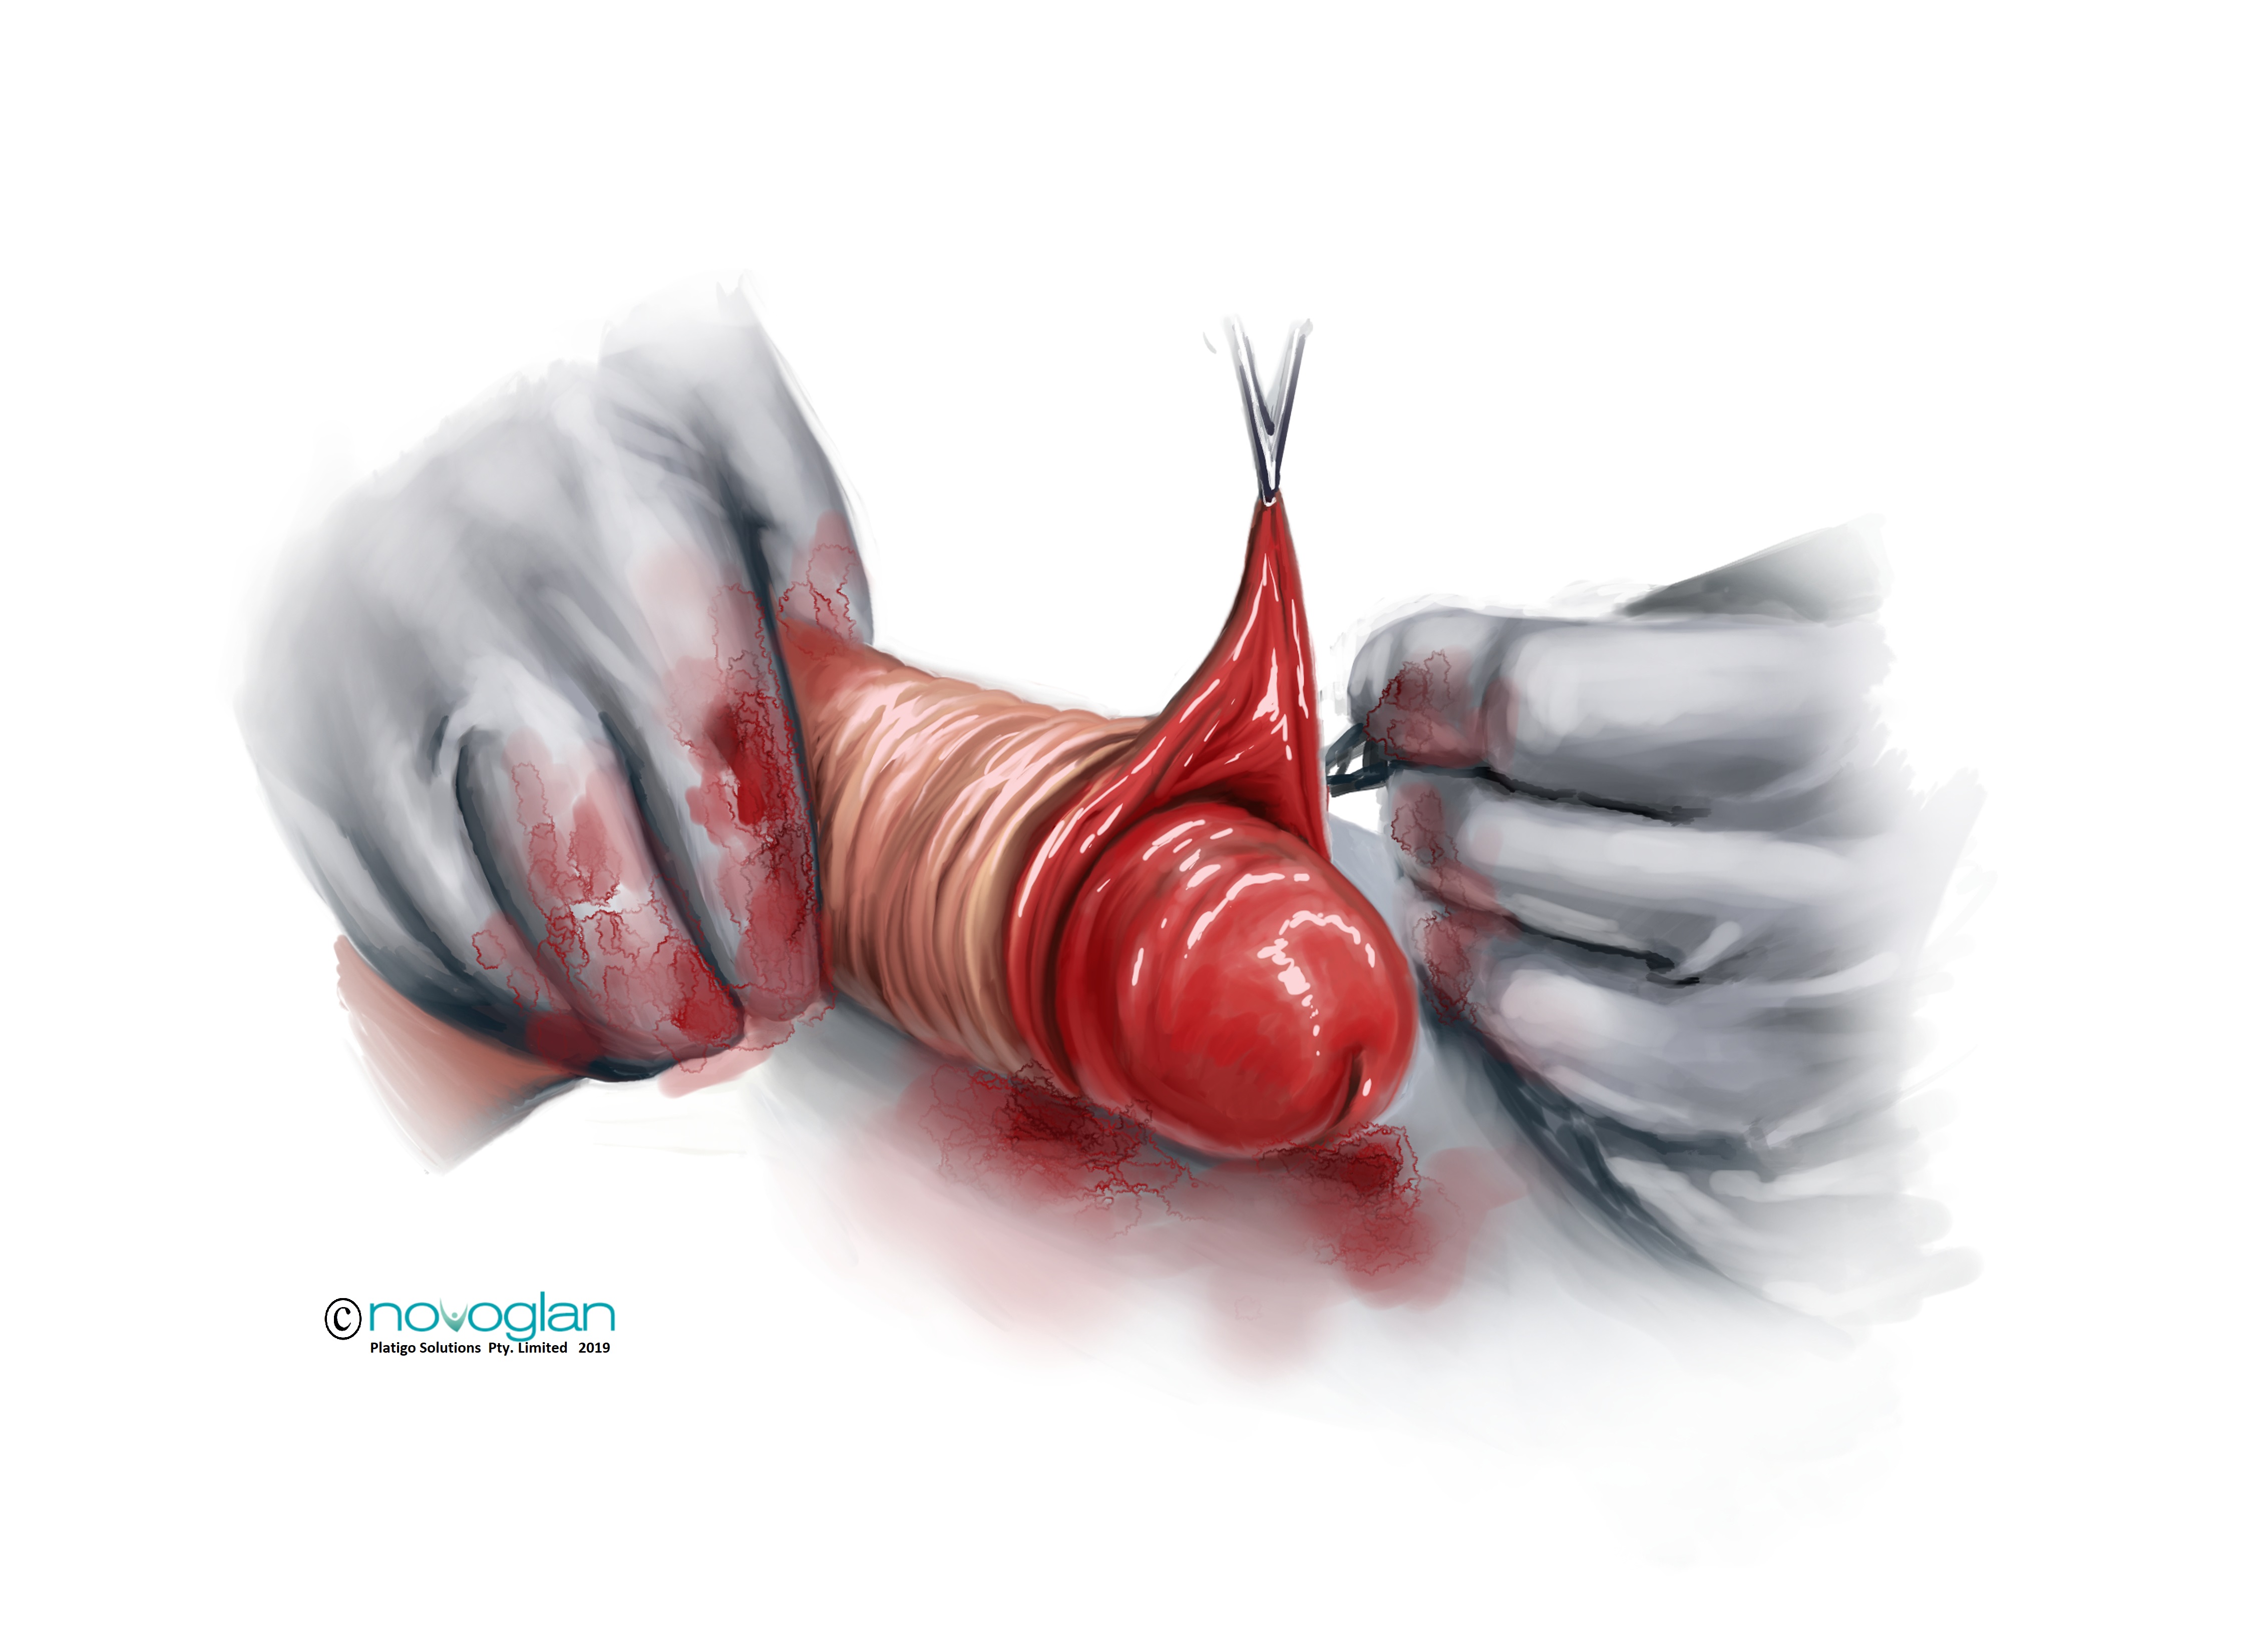 Circumcision-prevention-with-novoglan